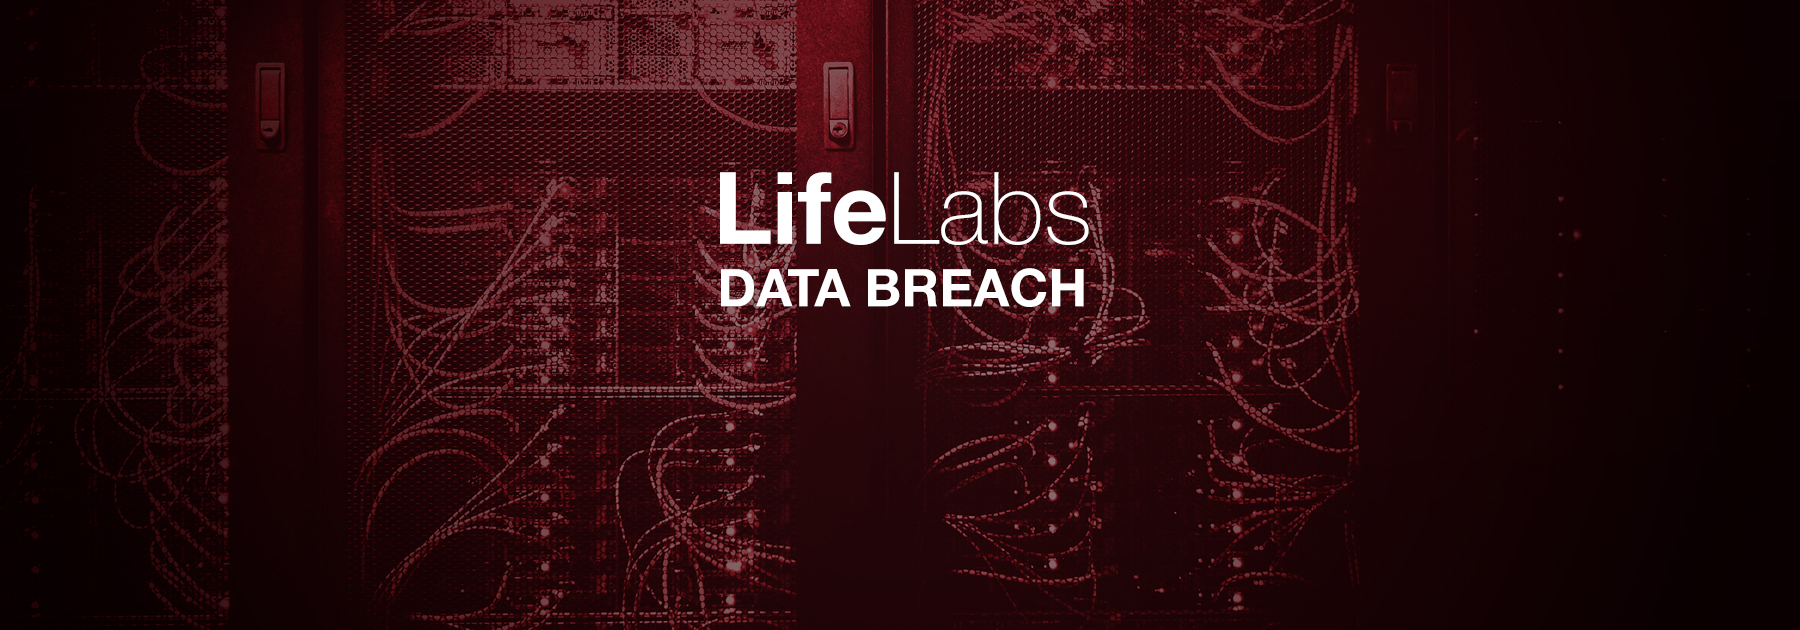 lifelabs data breach case study